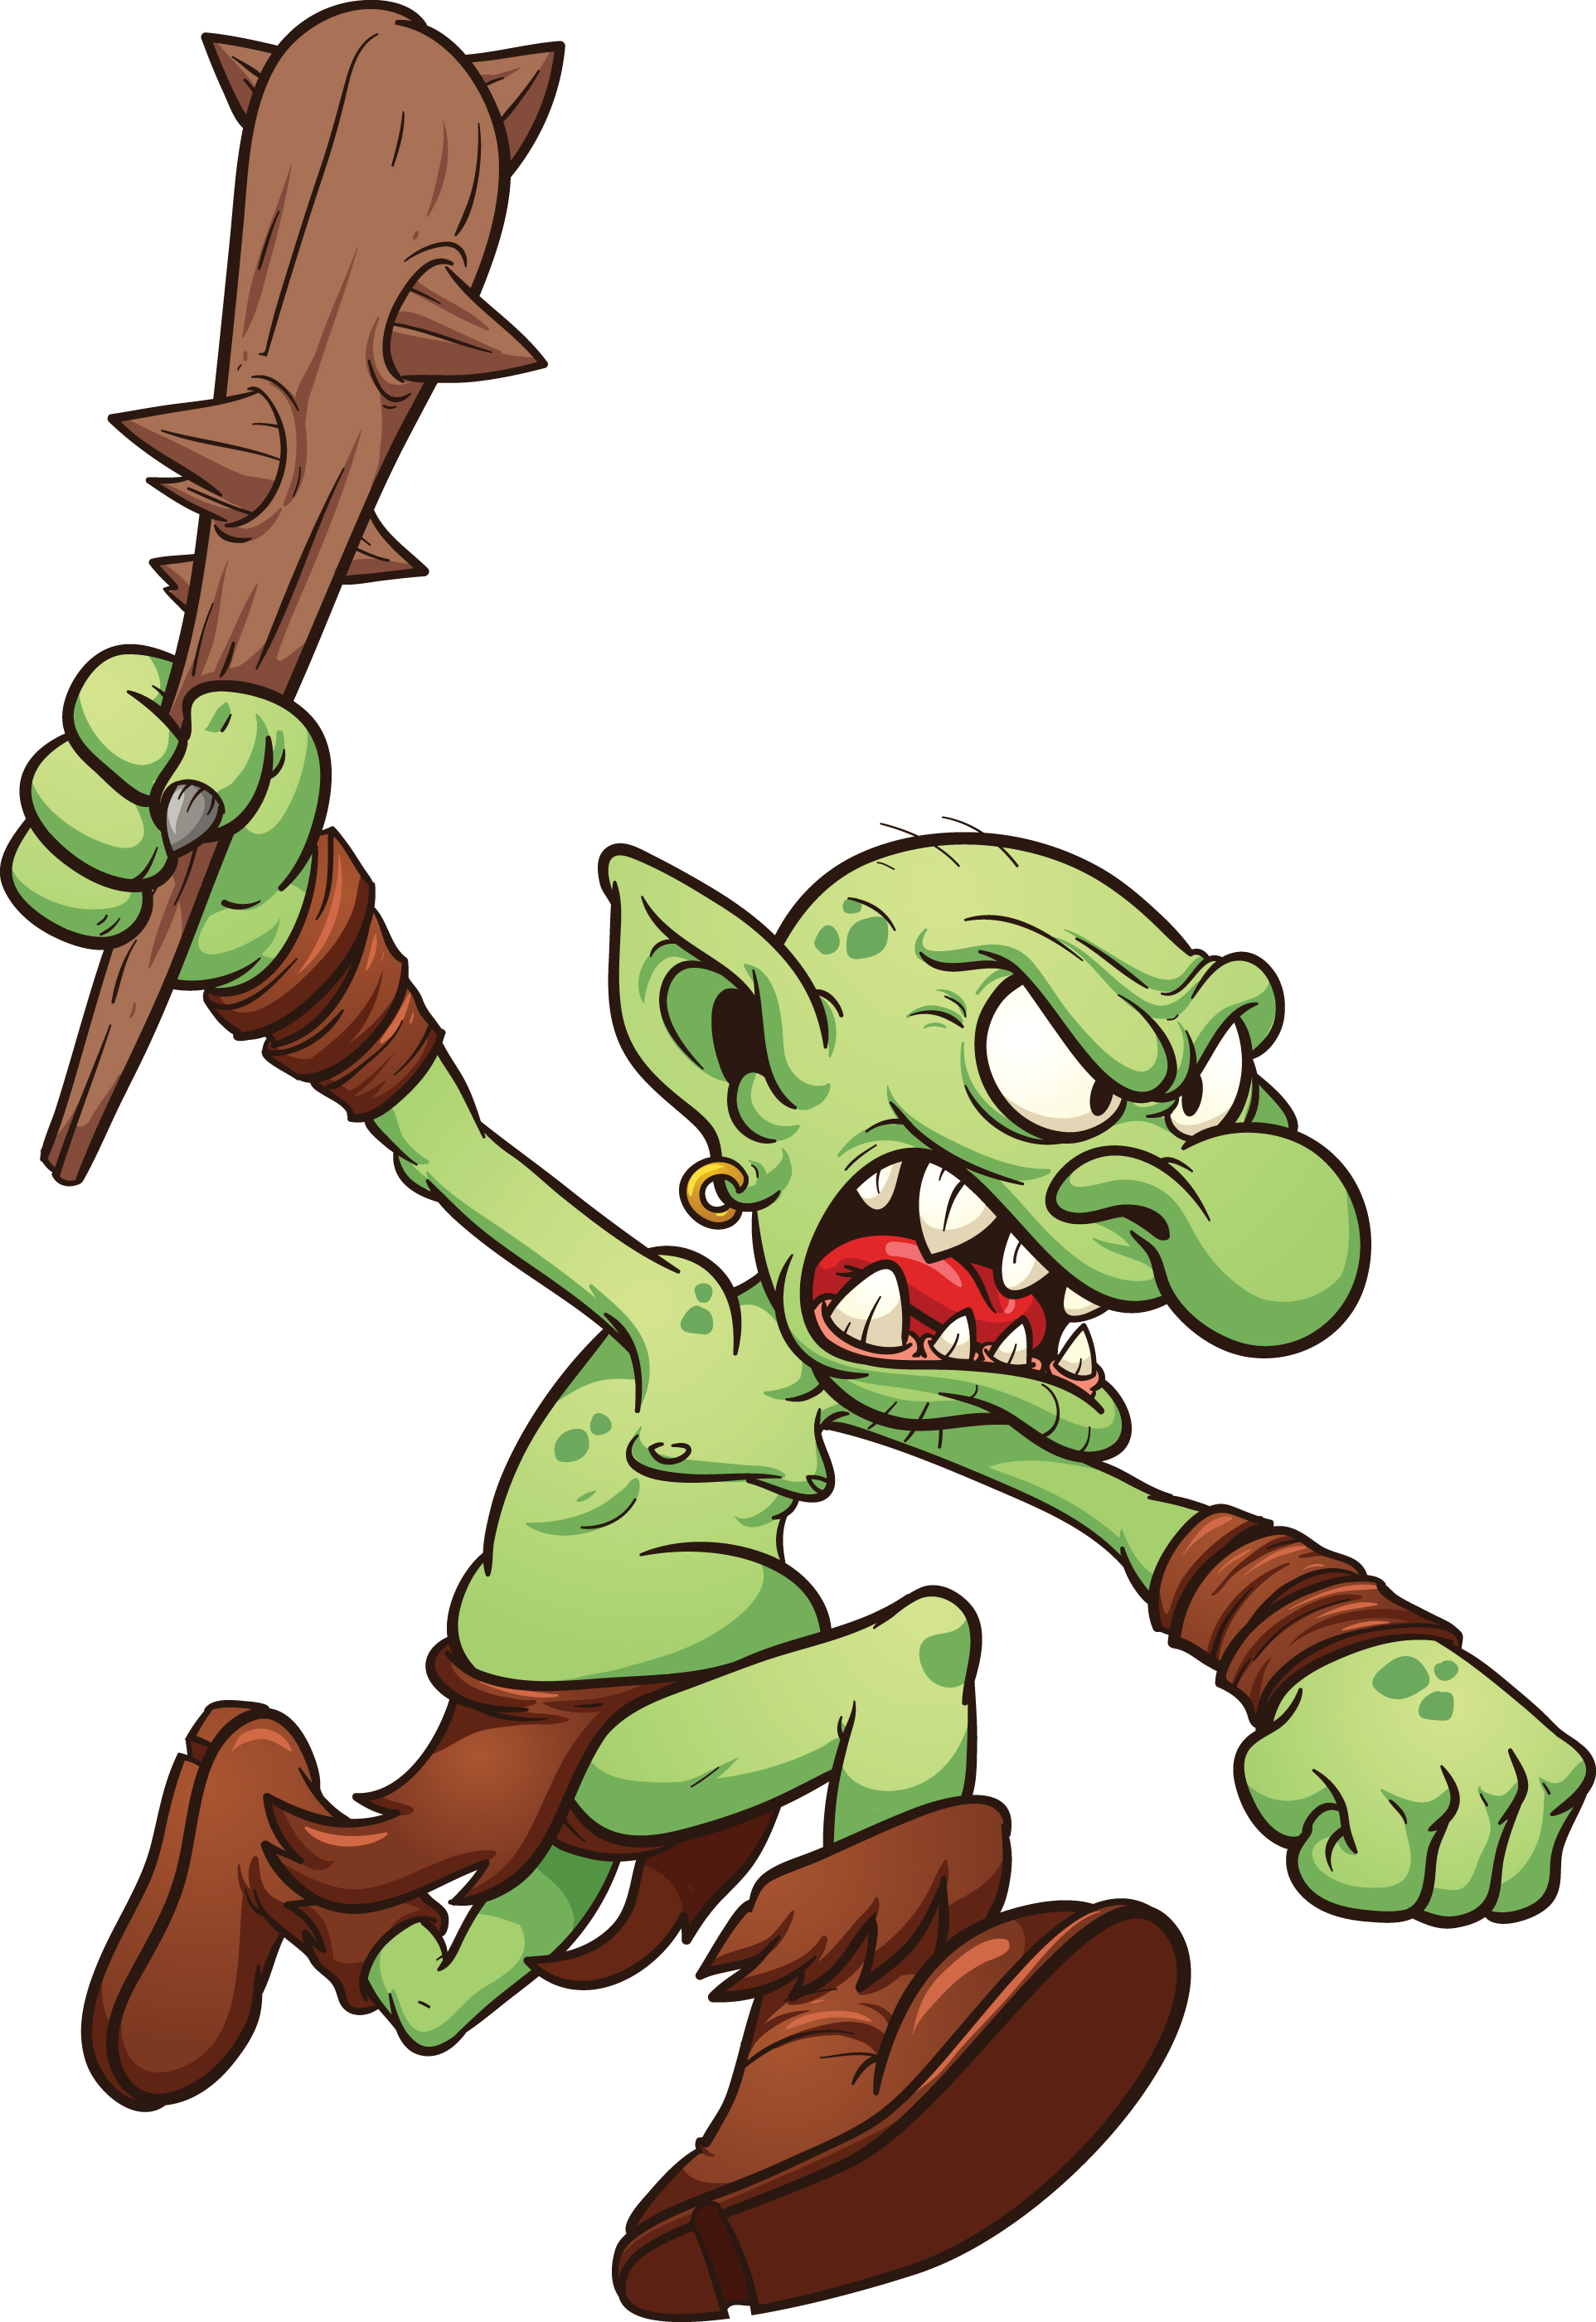 patent troll - https://depositphotos.com/17010771/stock-illustration-angry-running-troll.html